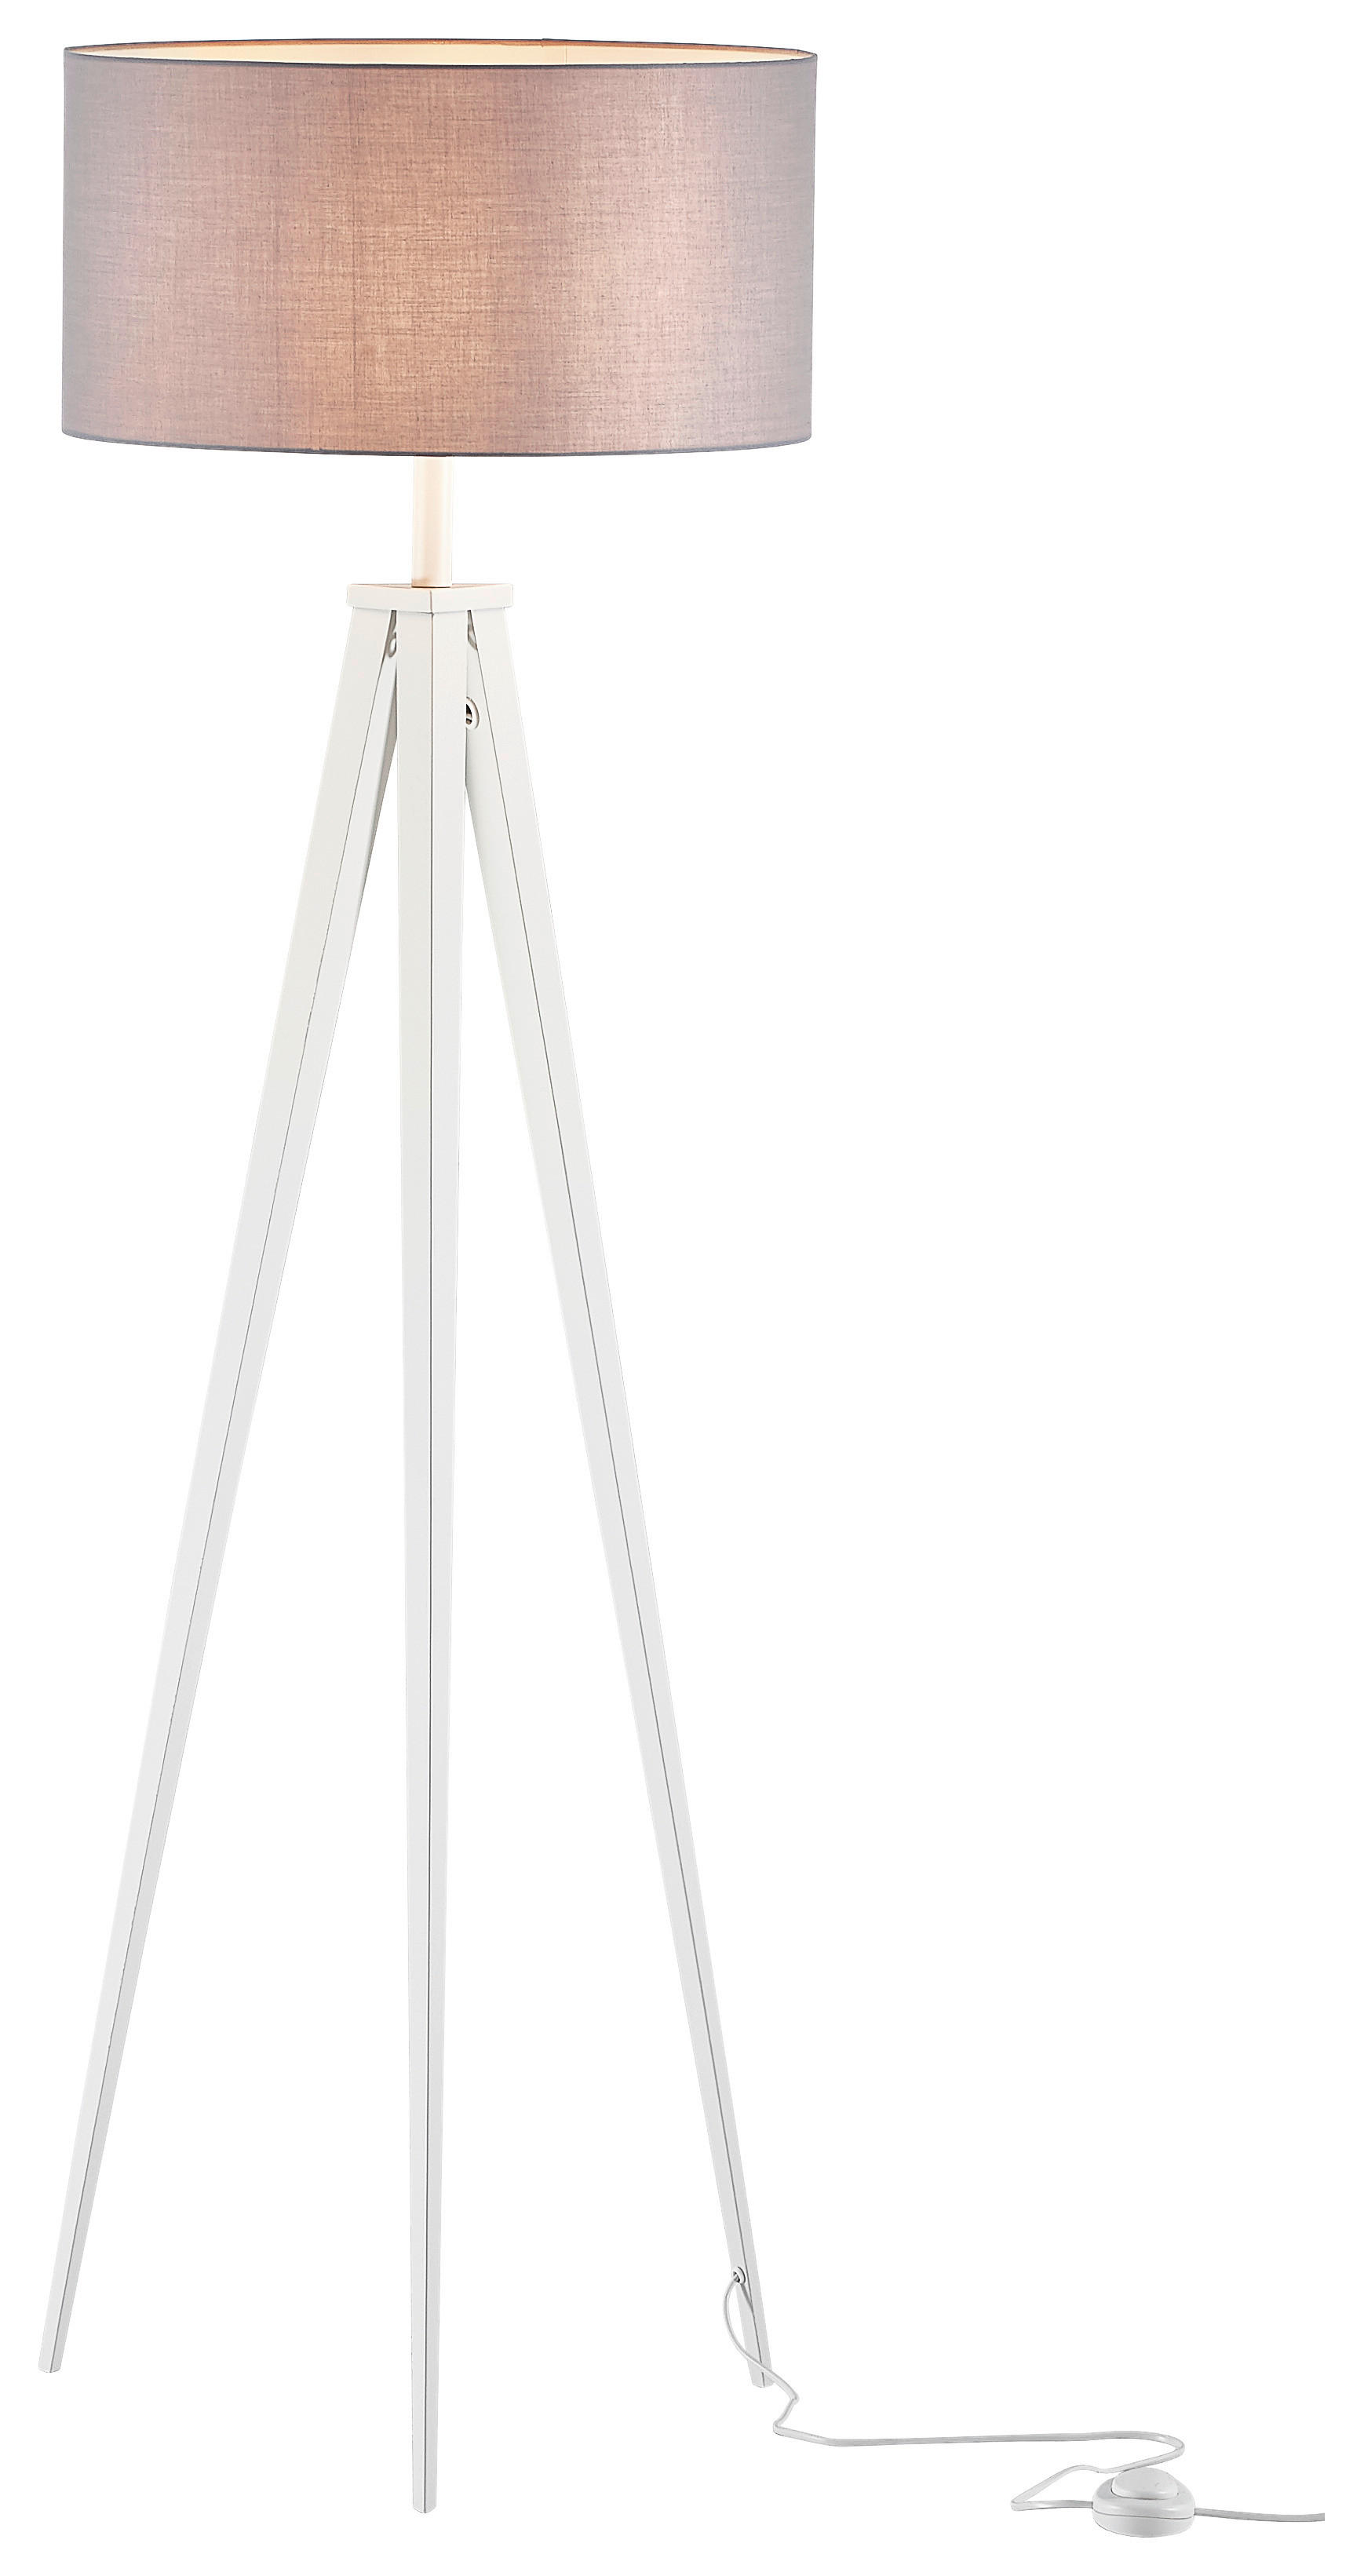 STOJACIA LAMPA, 49/158 cm  - biela/svetlosivá, Design, kov/textil (49/158cm) - Novel